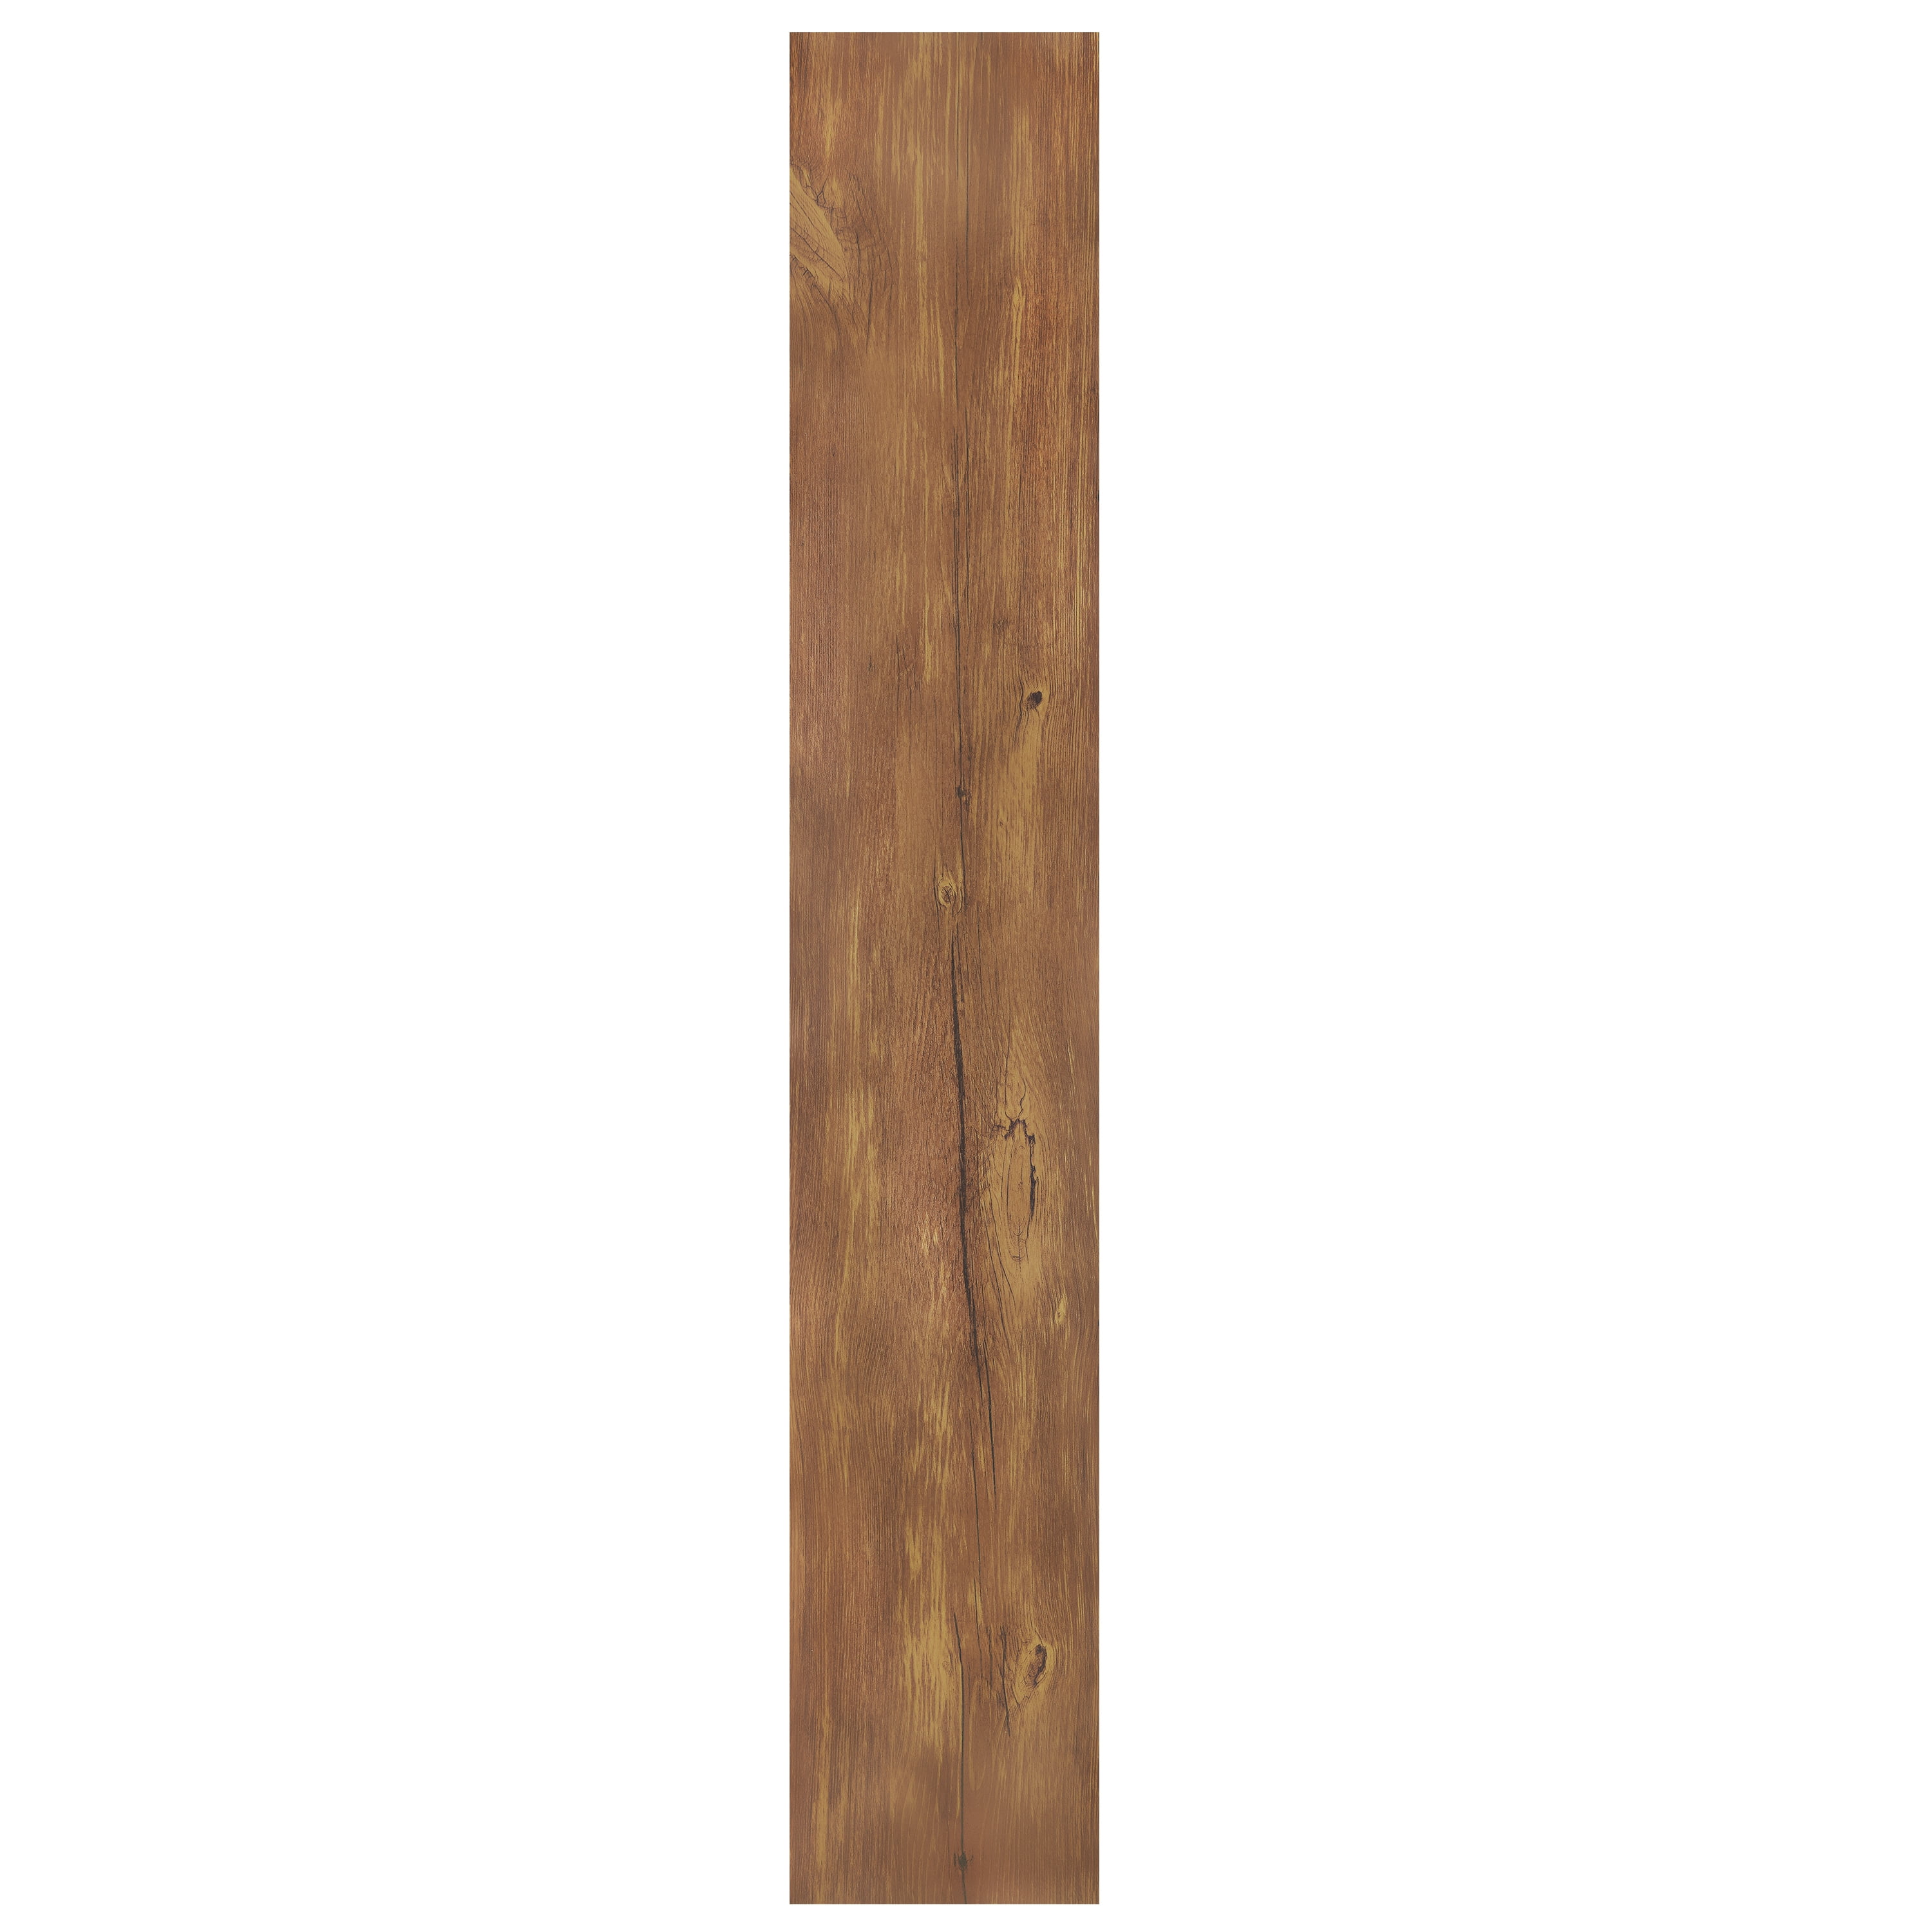 L Stick Vinyl Floor Planks, Vinyl Flooring Strips That Look Like Wood